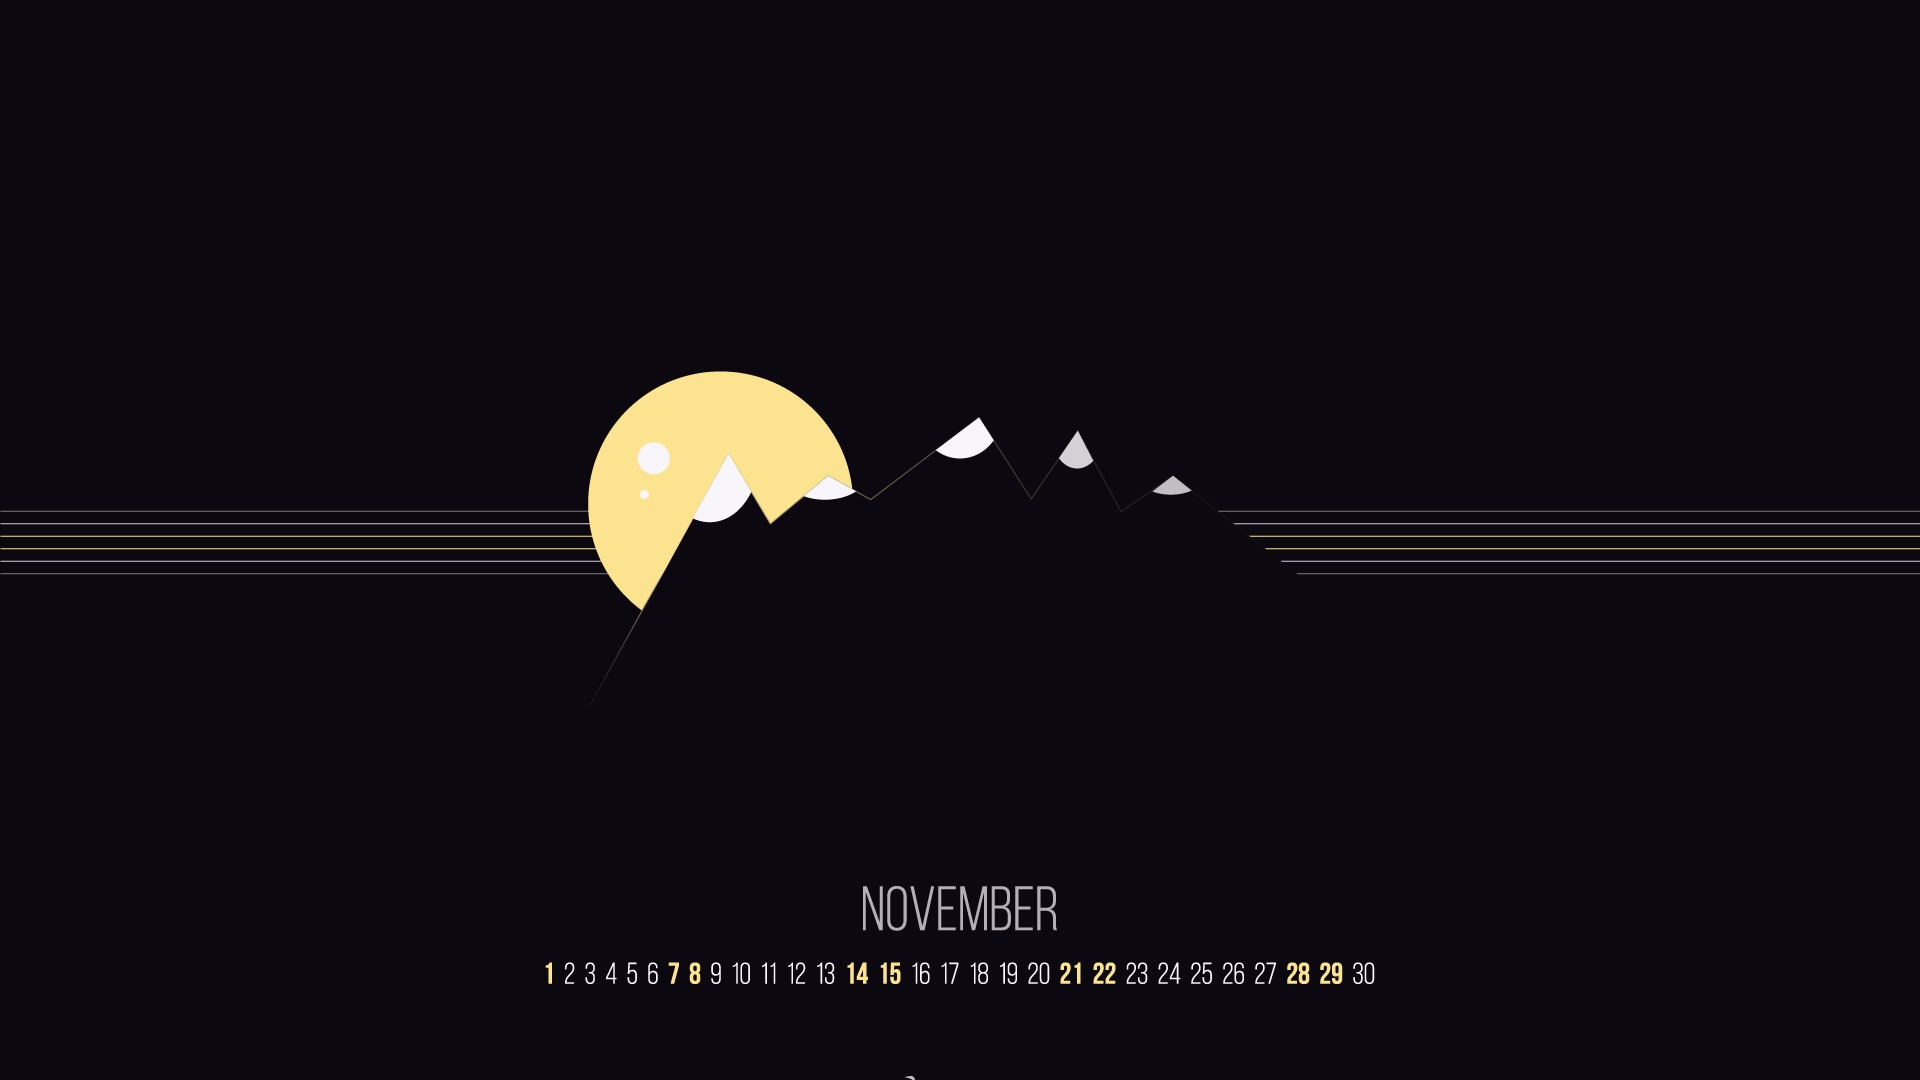 November 2015 Calendar wallpaper (2) #16 - 1920x1080